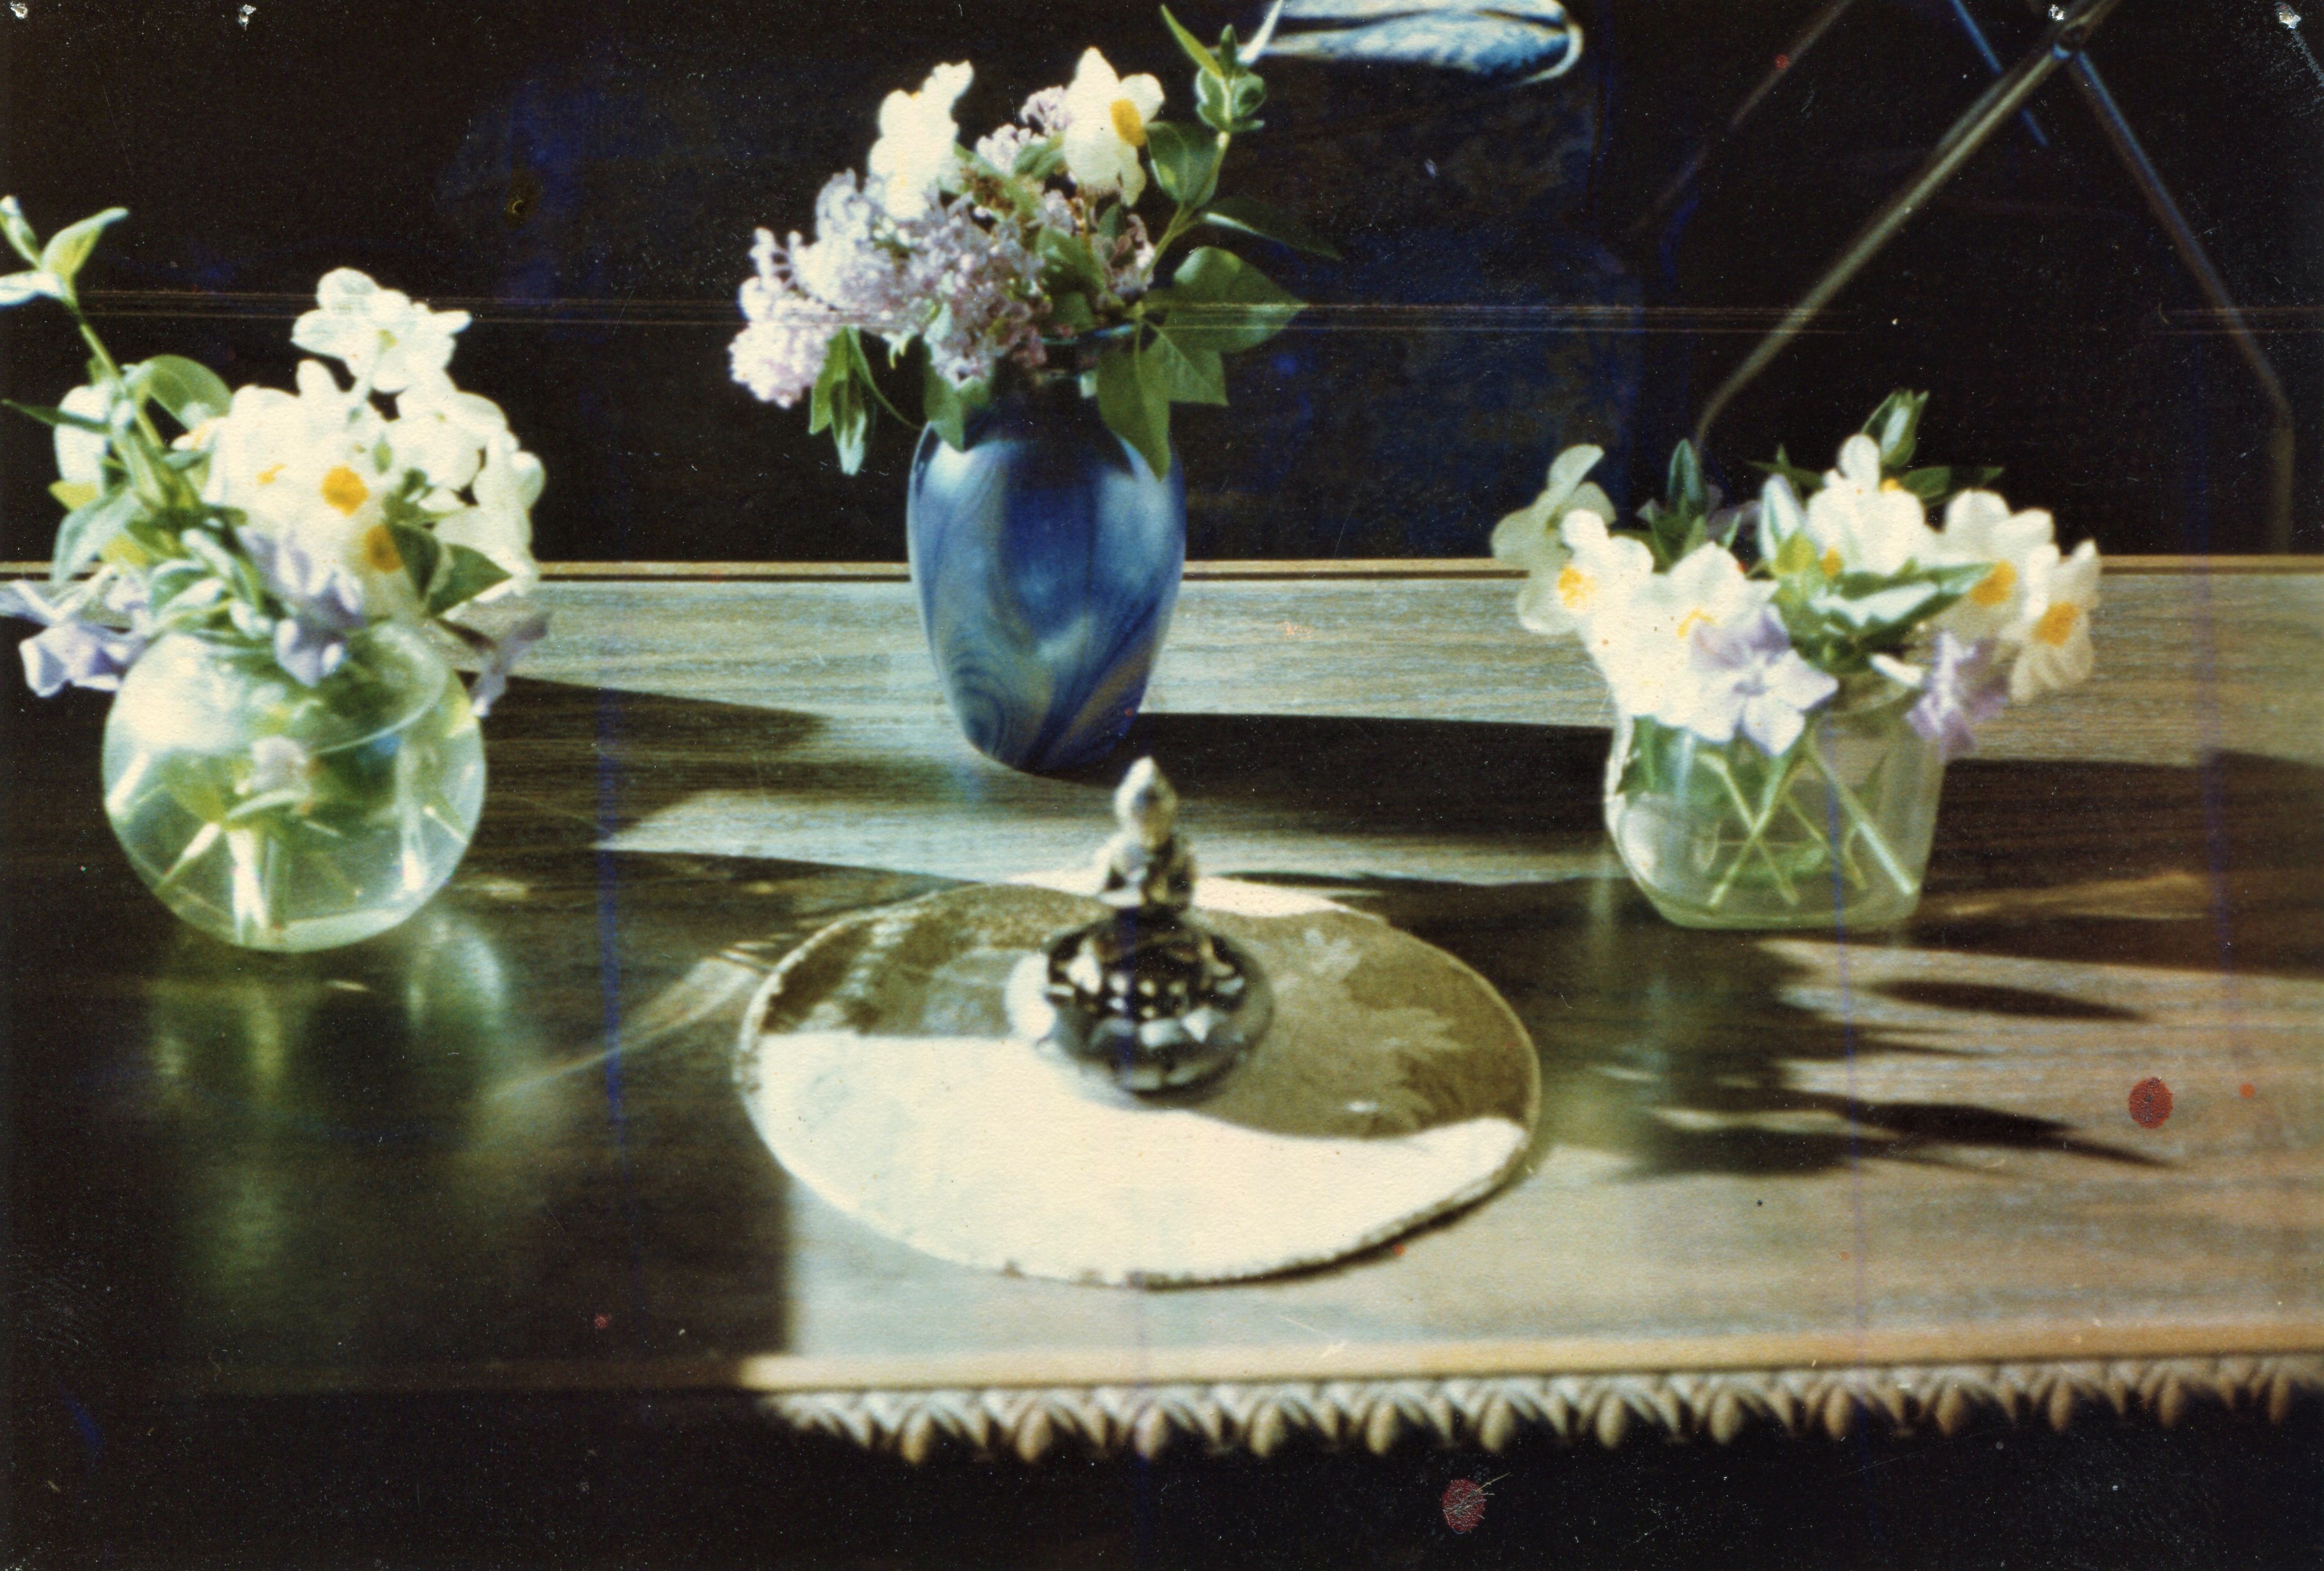 1984 FMW home, coffee table